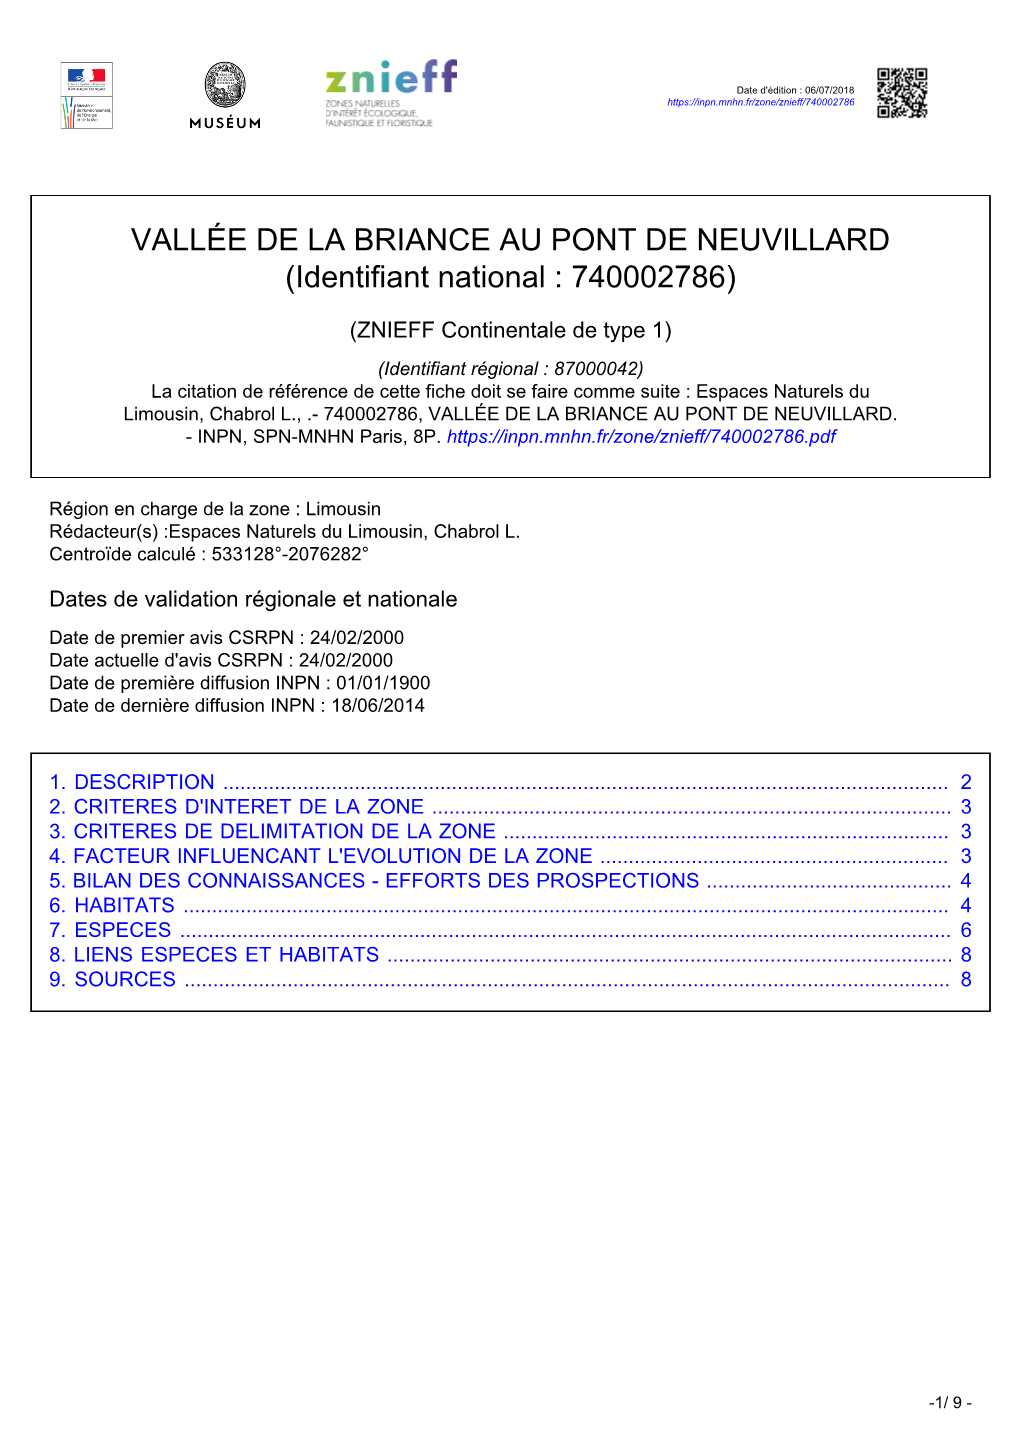 VALLÉE DE LA BRIANCE AU PONT DE NEUVILLARD (Identifiant National : 740002786)